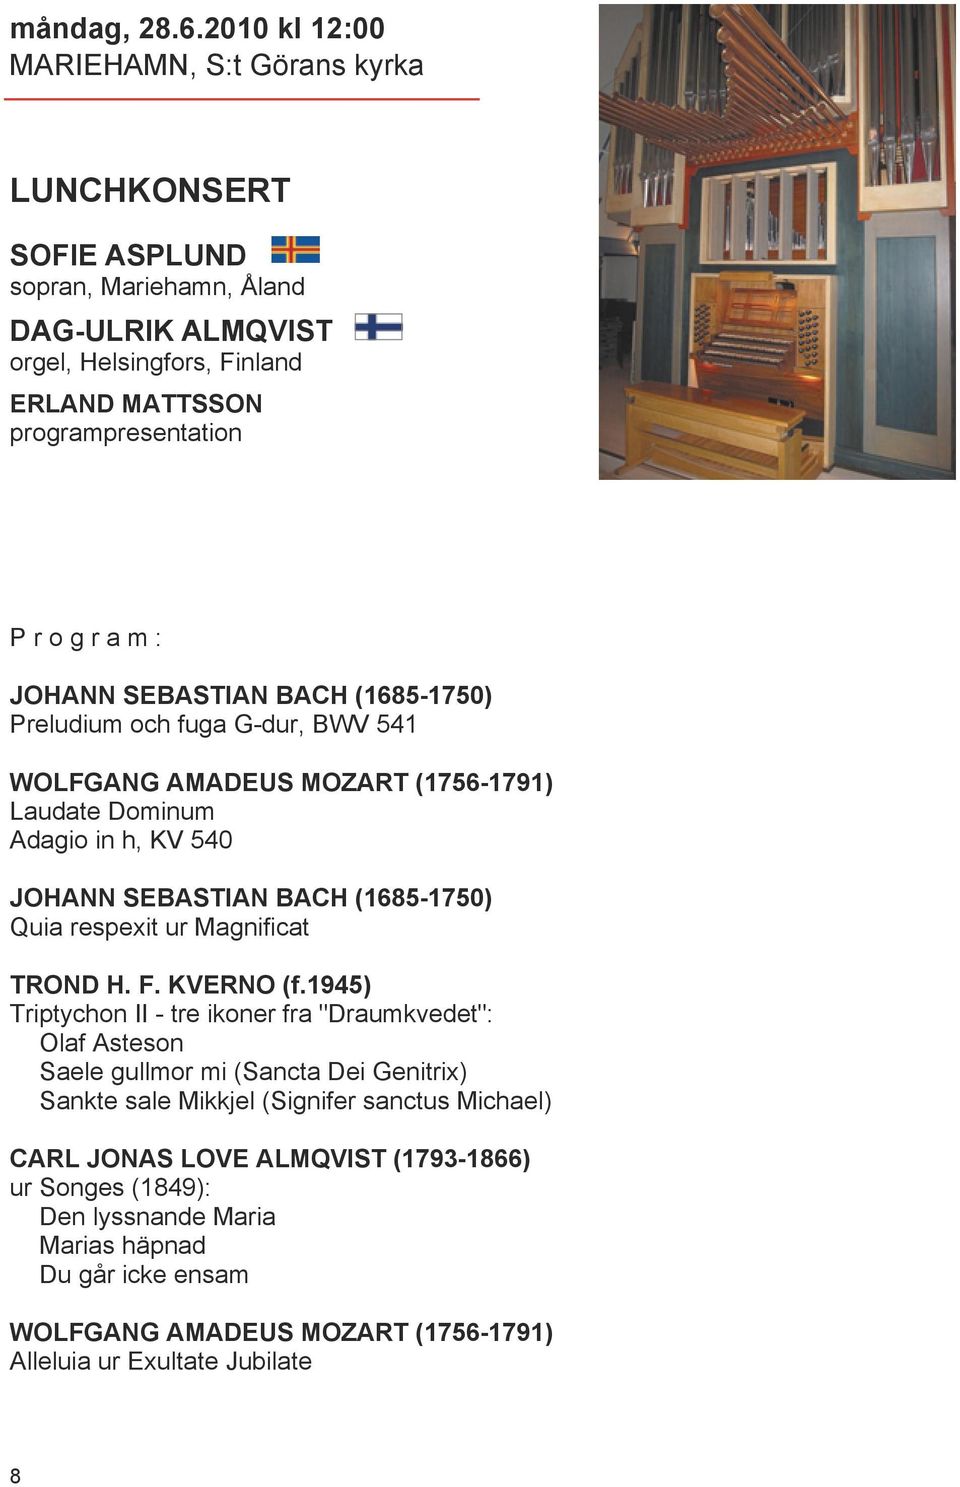 m : JOHANN SEBASTIAN BACH (1685-1750) Preludium och fuga G-dur, BWV 541 WOLFGANG AMADEUS MOZART (1756-1791) Laudate Dominum Adagio in h, KV 540 JOHANN SEBASTIAN BACH (1685-1750) Quia